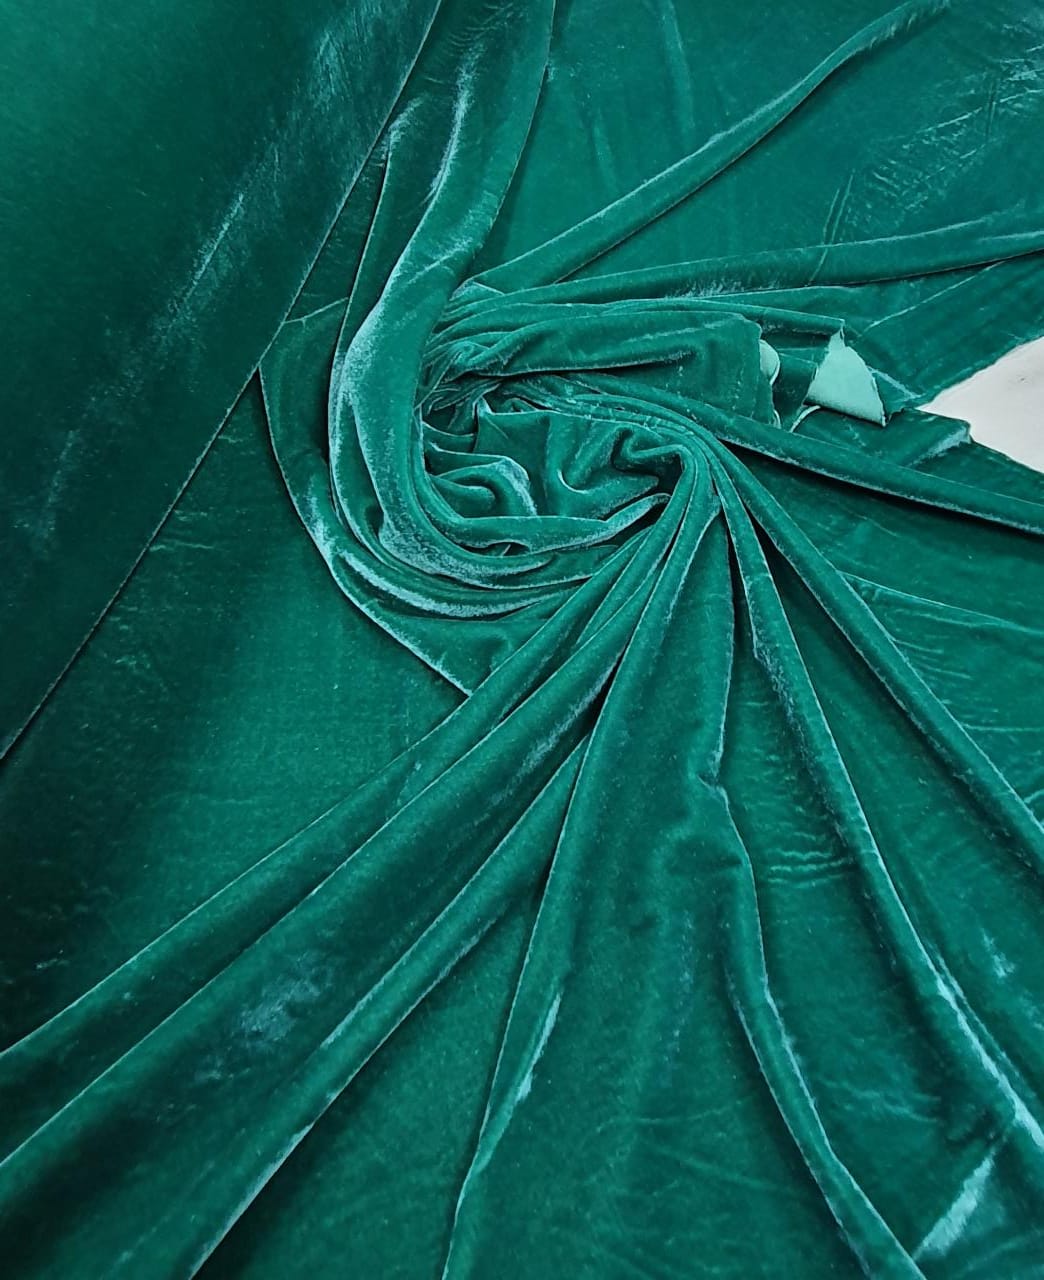 Veludo Spandex c/ Lycra Verde Bandeira Claro - Largura 1,50 m x Comprimento 3 m 